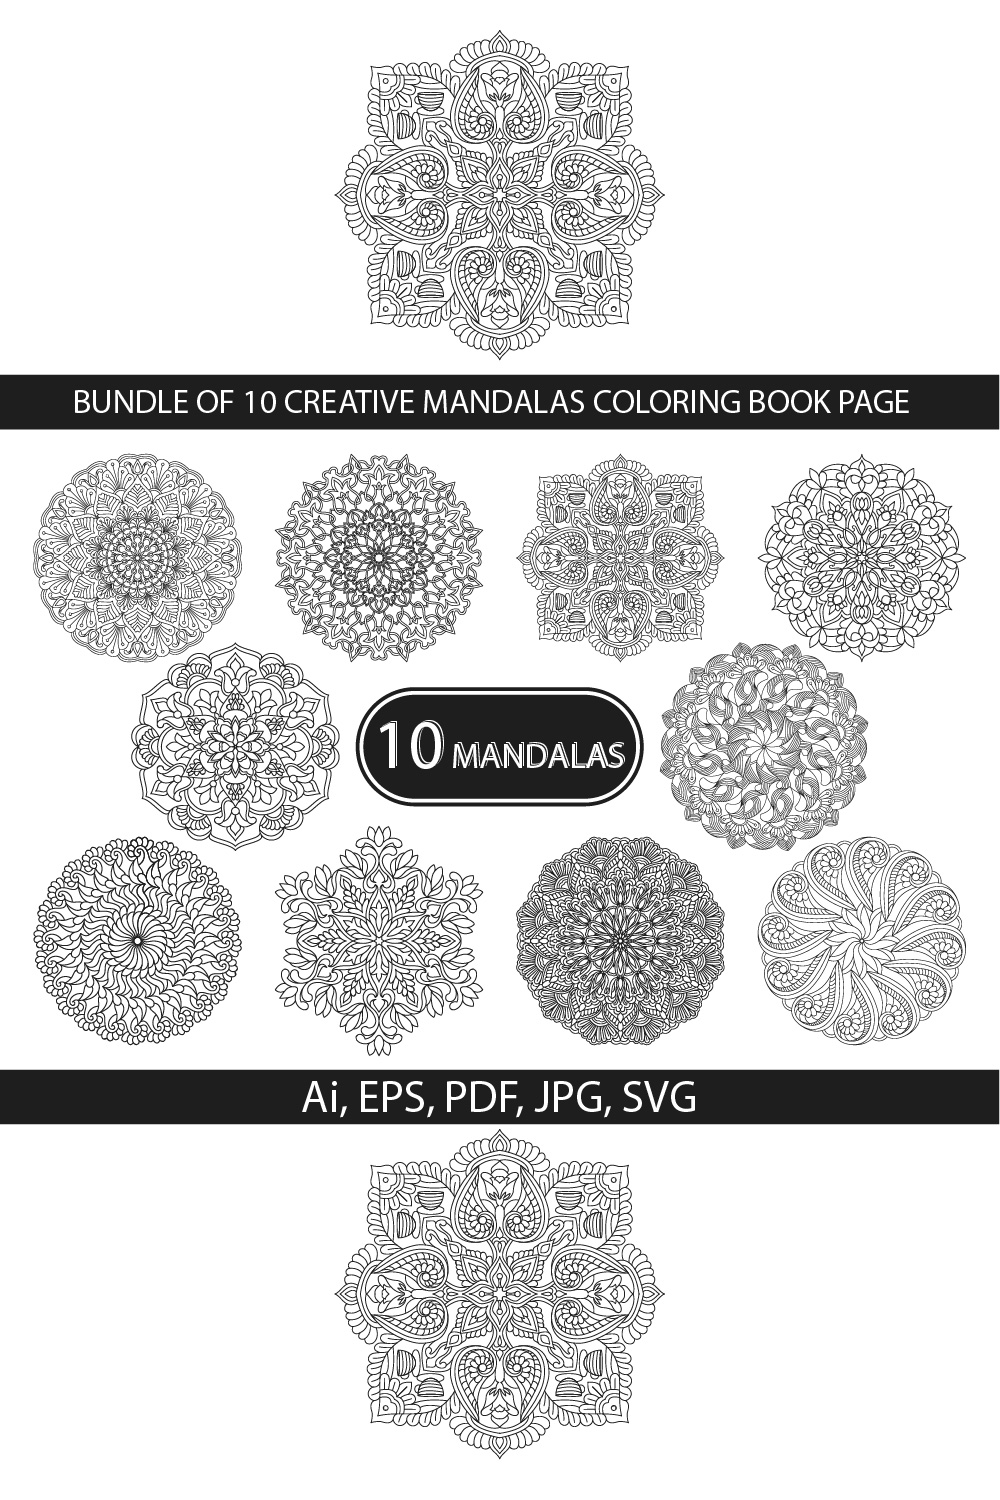 Bundle of 10 Creative Mandalas Coloring Book Pages pinterest preview image.